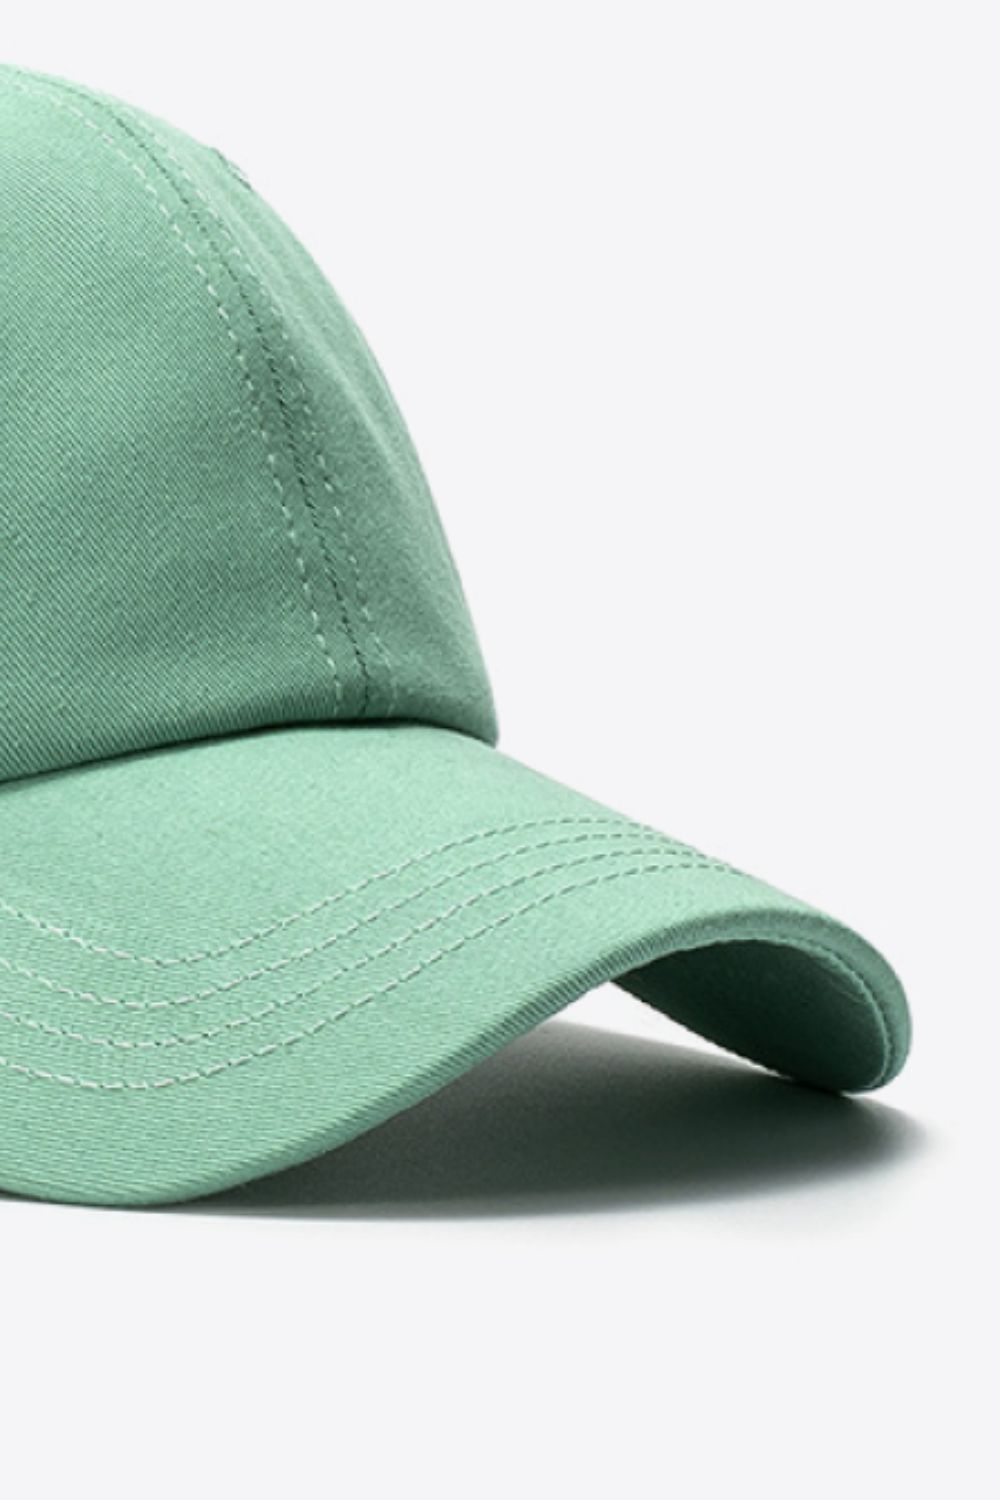 Cotton Baseball Hat green brim